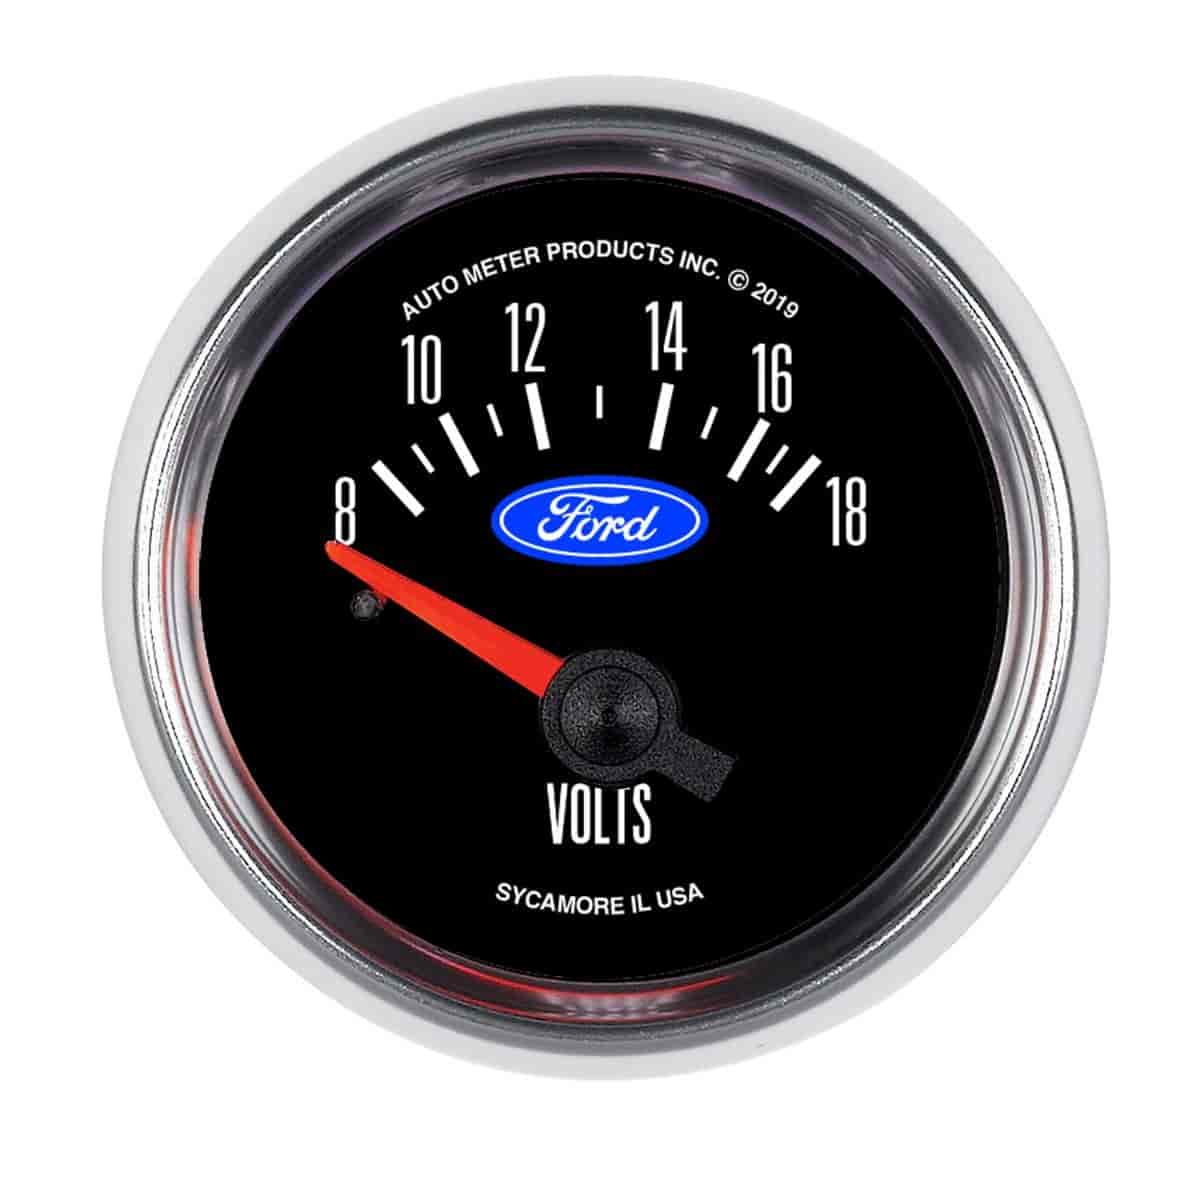 Officially-Licensed Ford Voltmeter 2 1/16 in., 8-18 V,